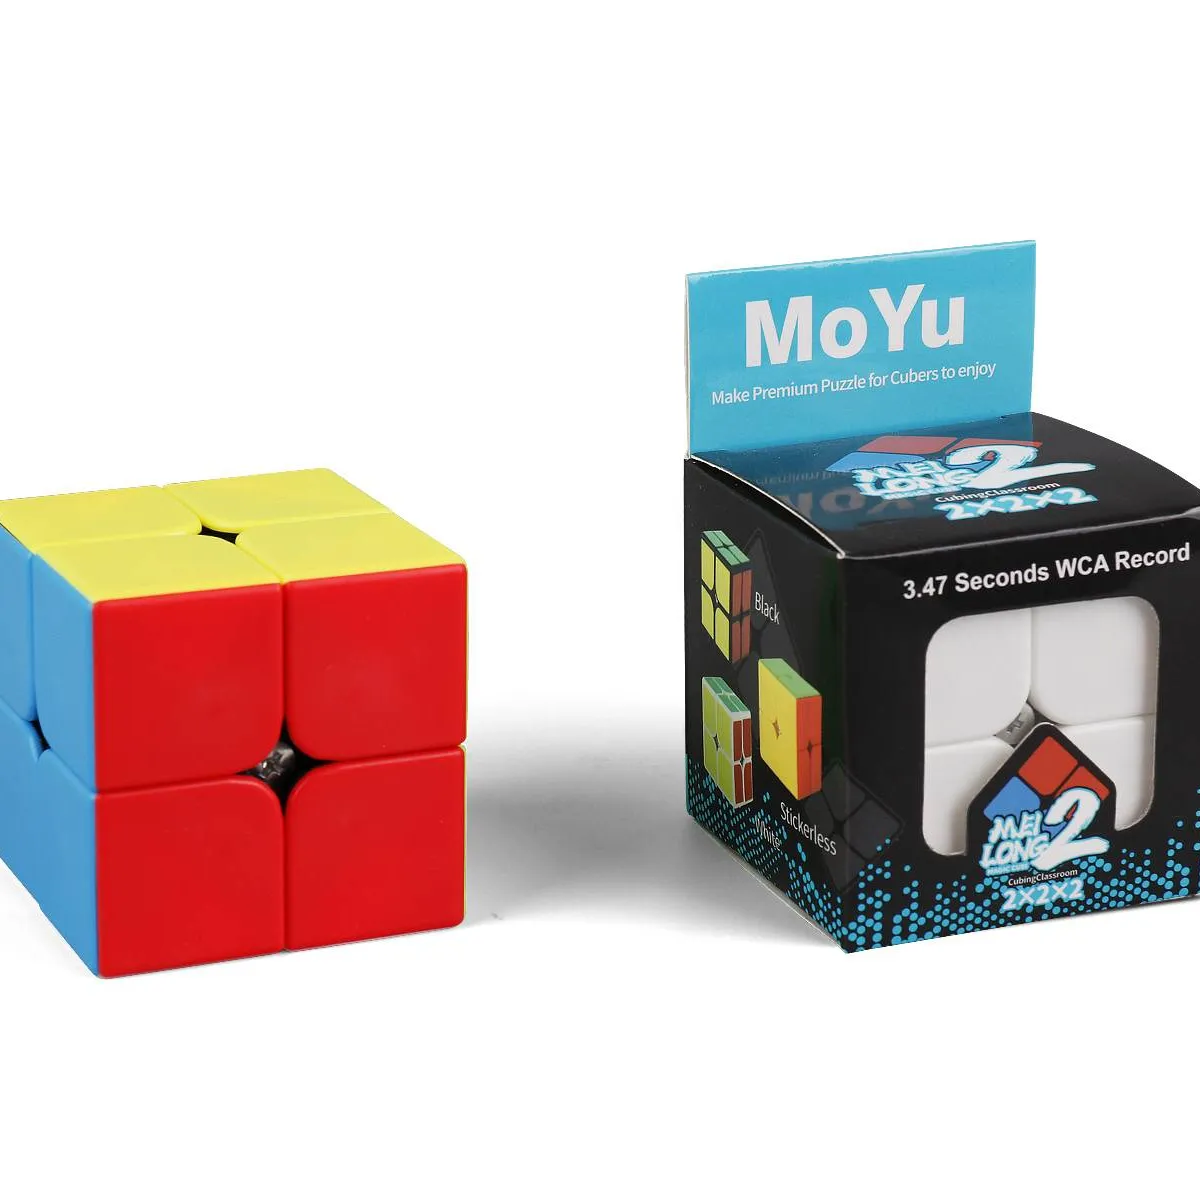 MOYU cube Meilong 2x2x2 ABS plastic magic cube for educational